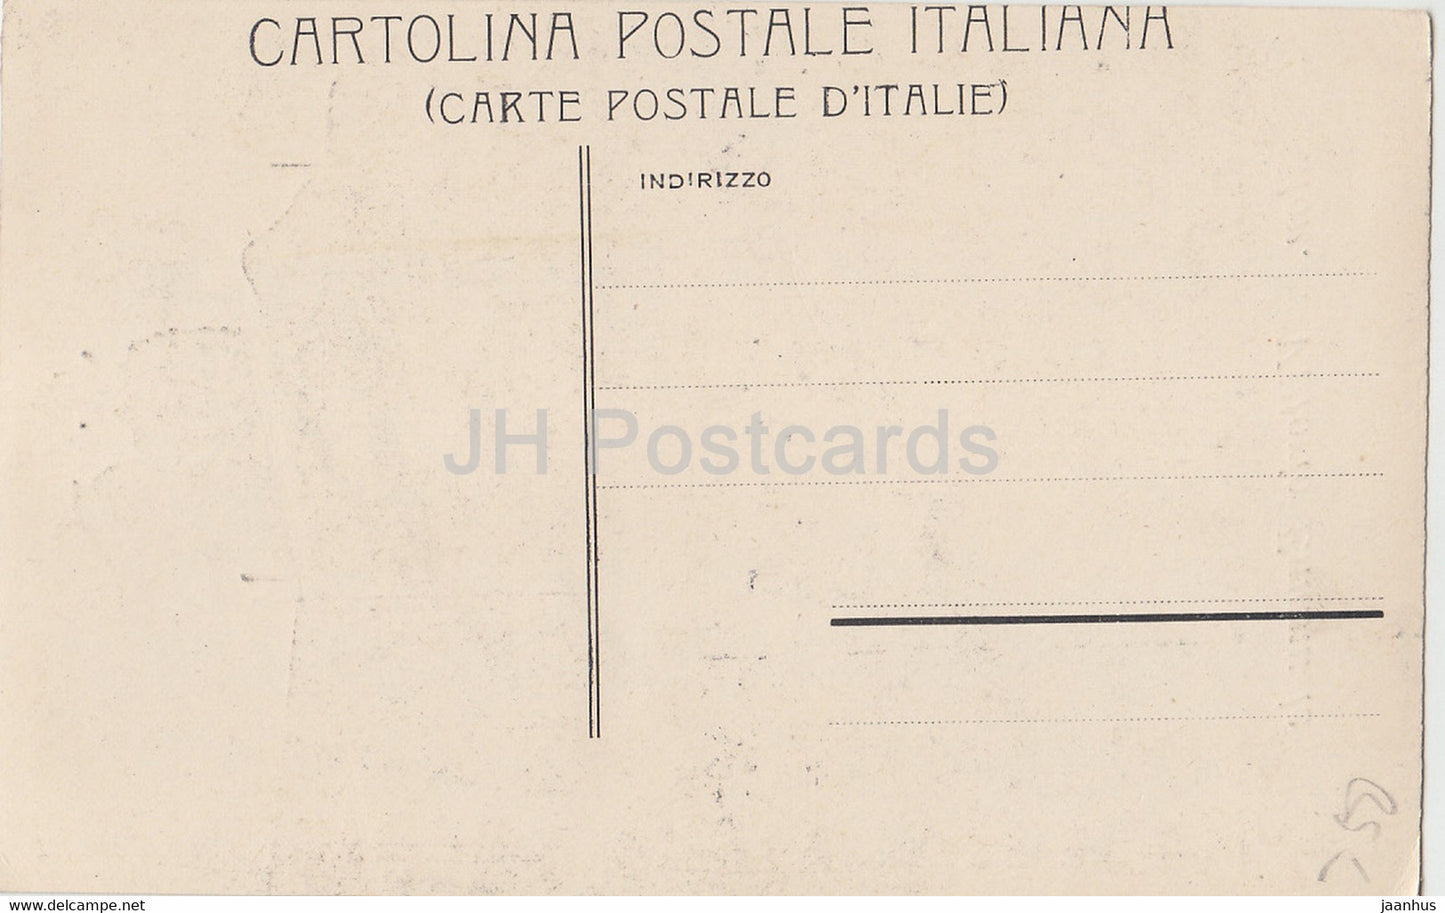 Roma - Rome - Mon a Vittorio Emanuele - monument - cheval - carte postale ancienne - Italie - inutilisé